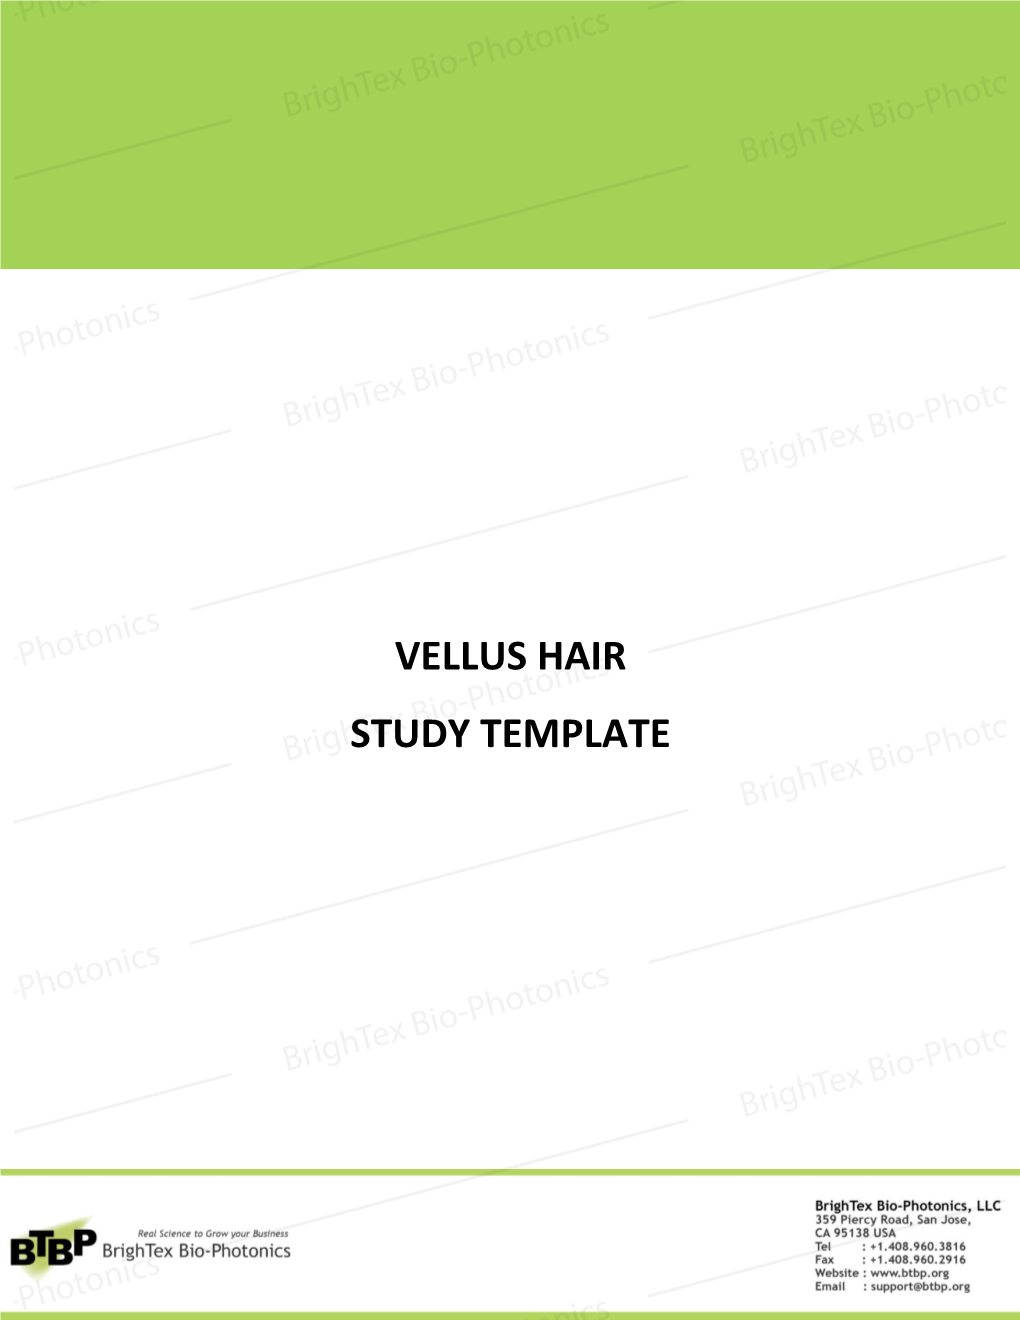 Vellus Hair Study Template